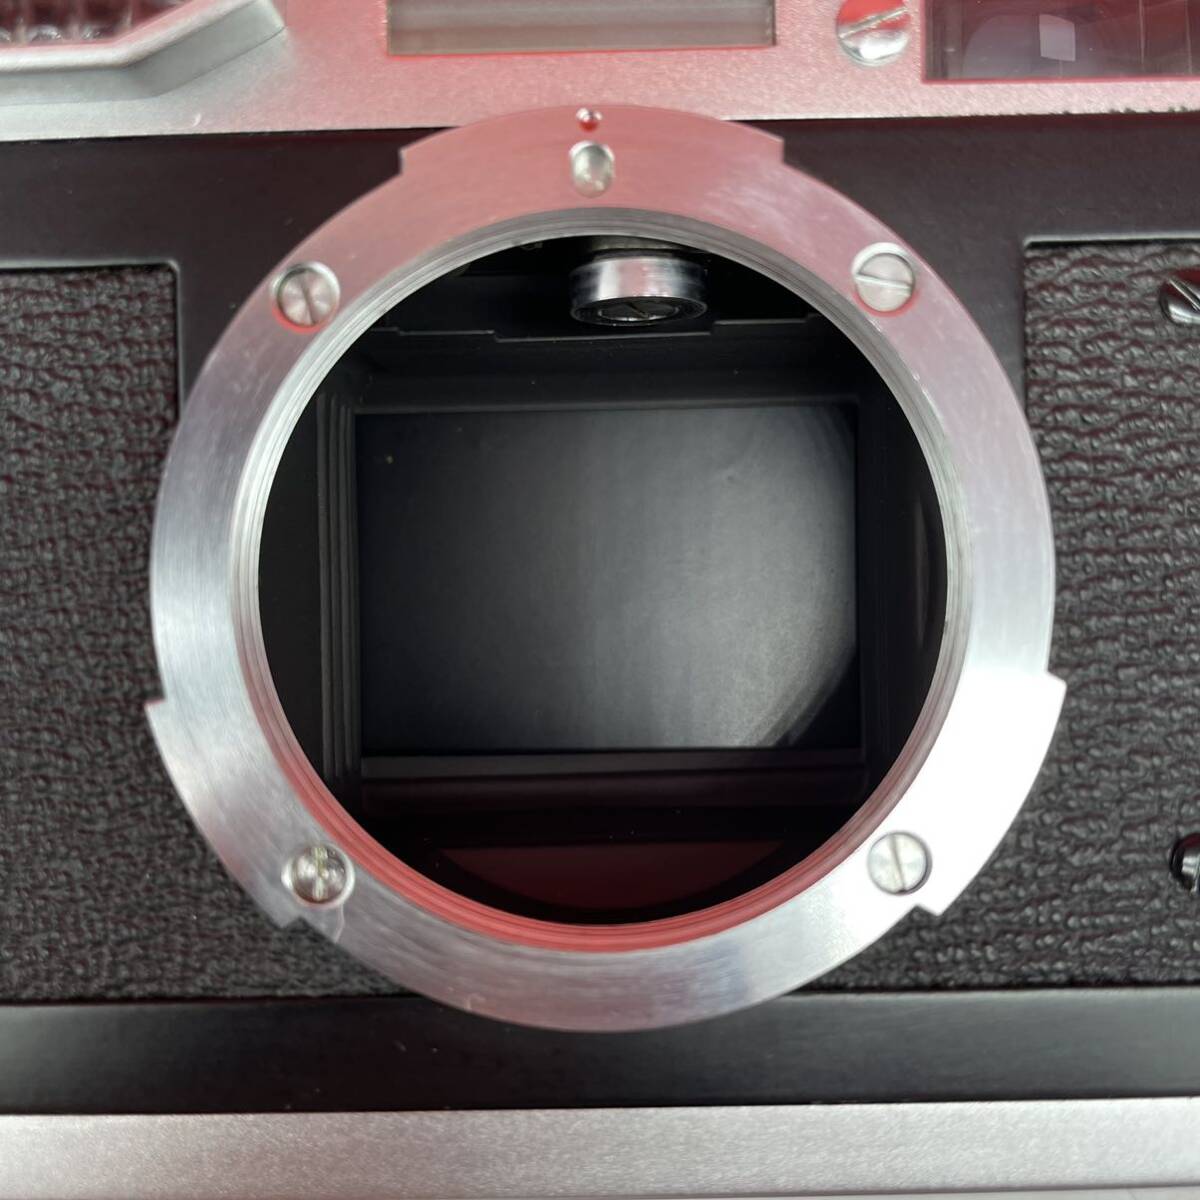 * Canon MODEL7 range finder film camera VOIGTLANDER ULTRON 35mm F1.7 lens accessory coupler shutter OK Canon 